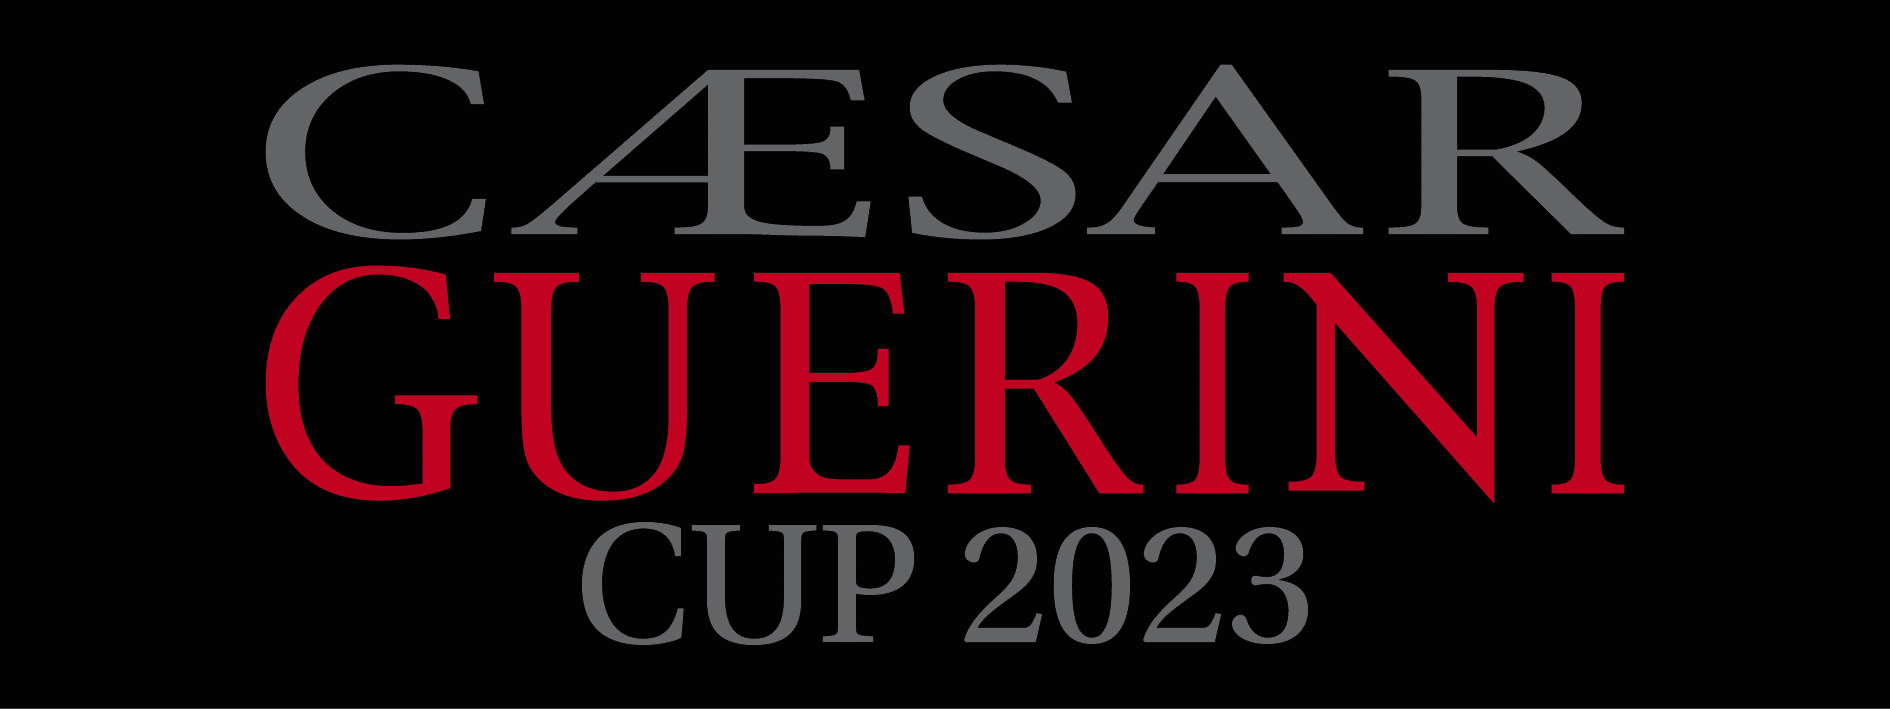 caesar-guerini-cup-2023-header